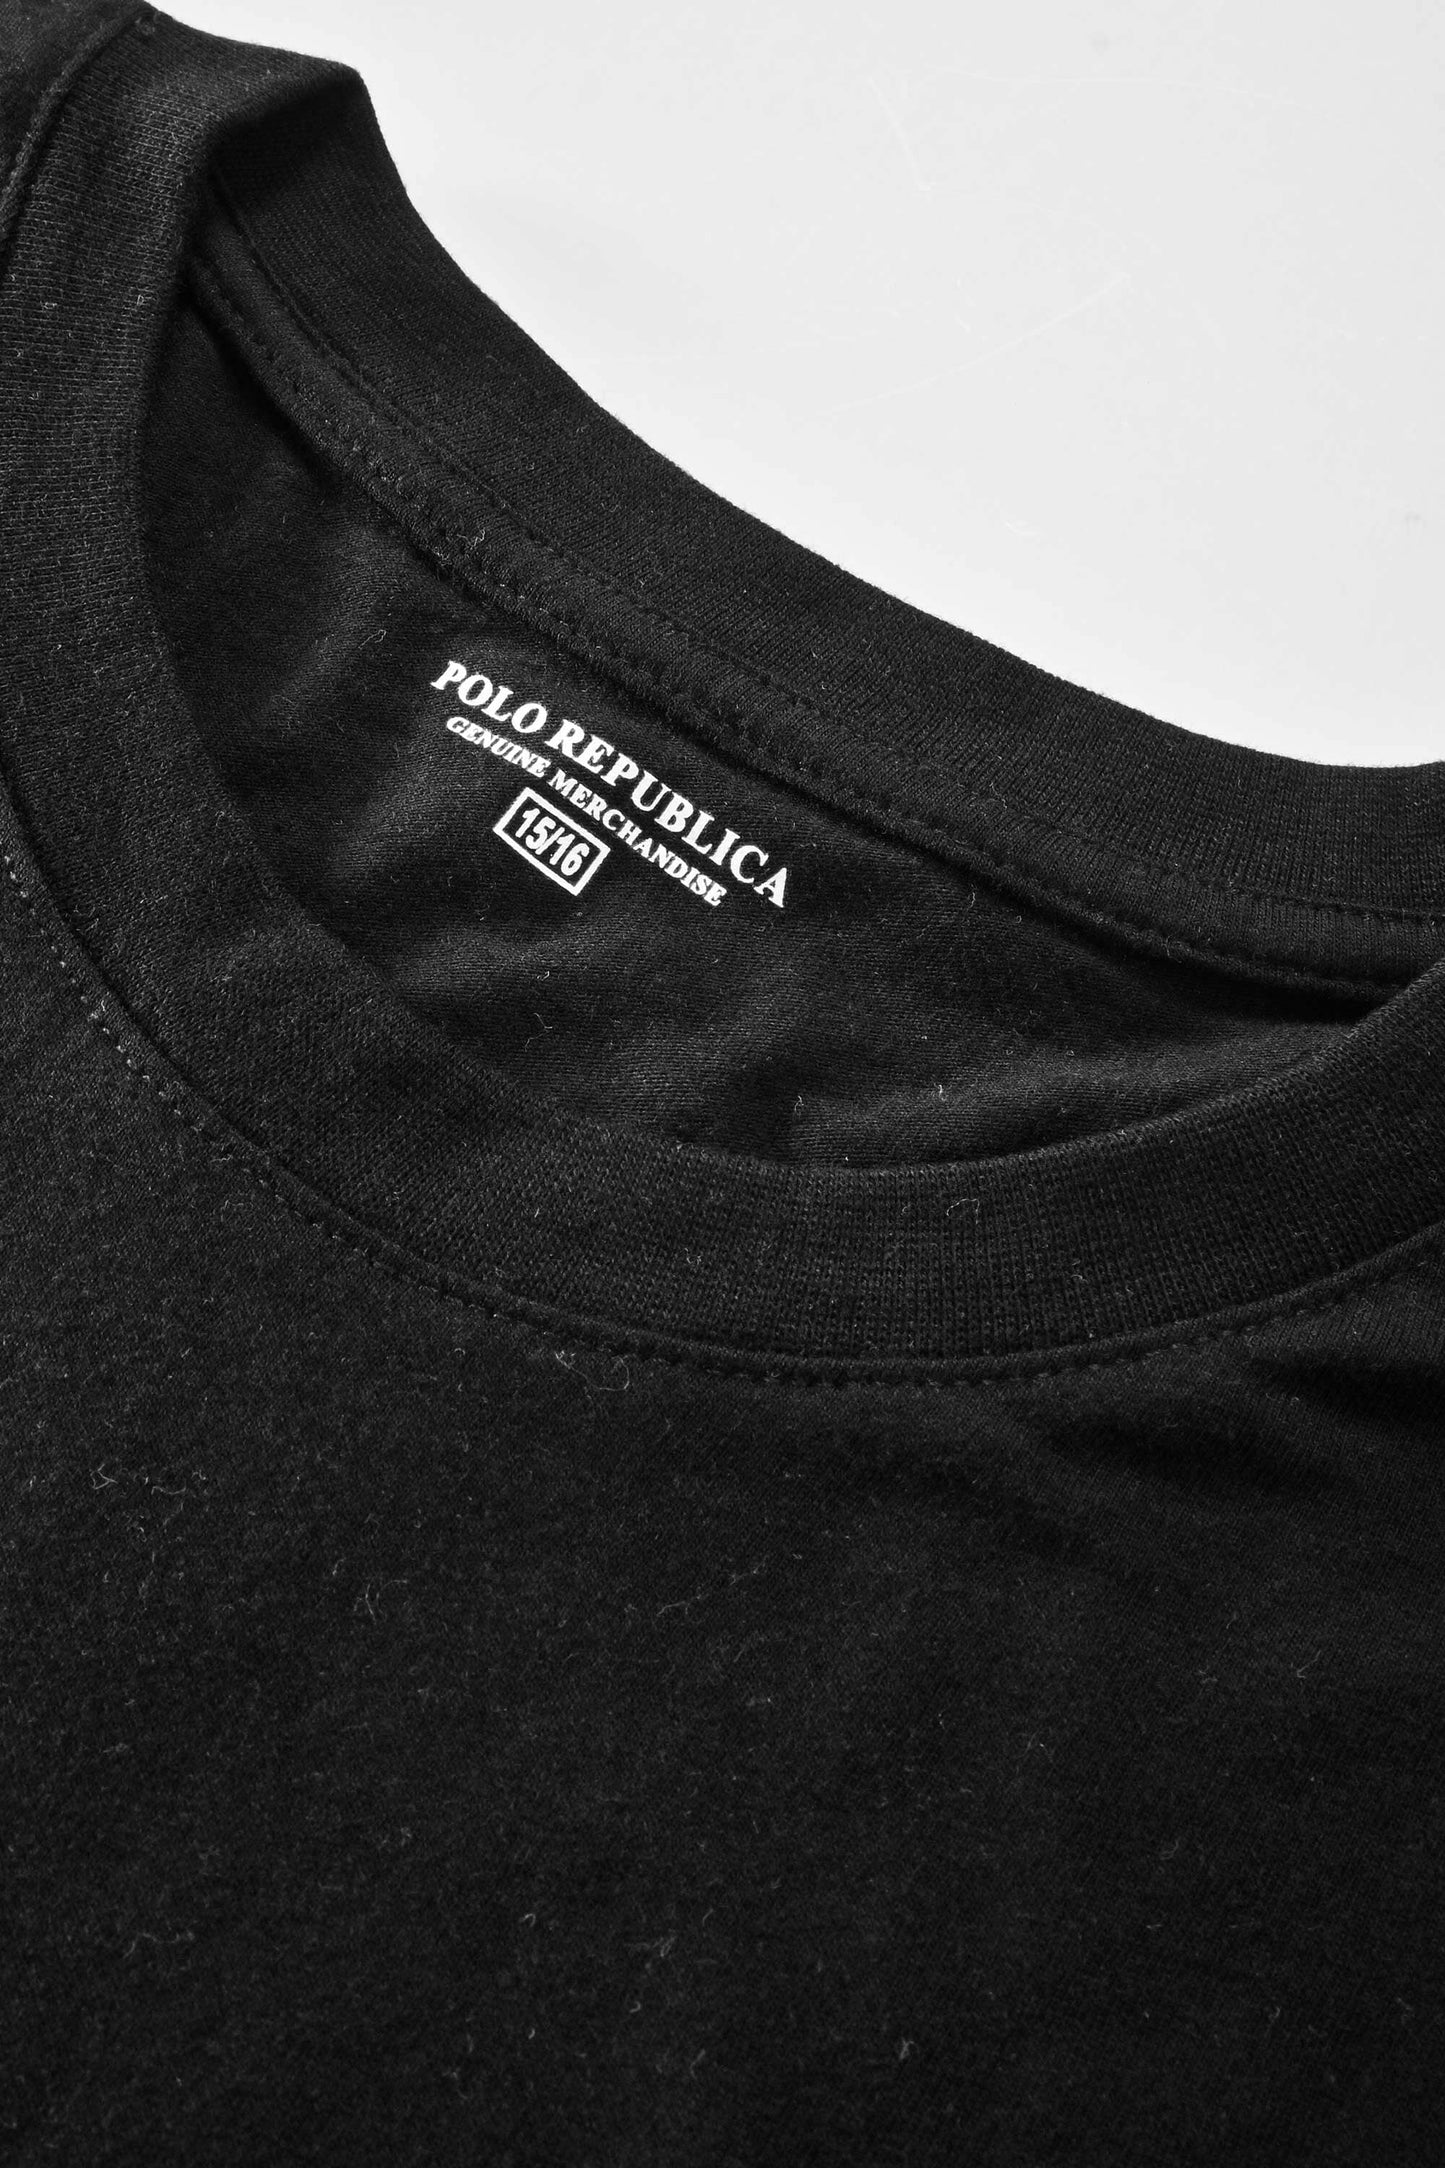 Polo Republica Boy's Urban Street Printed Tee Shirt